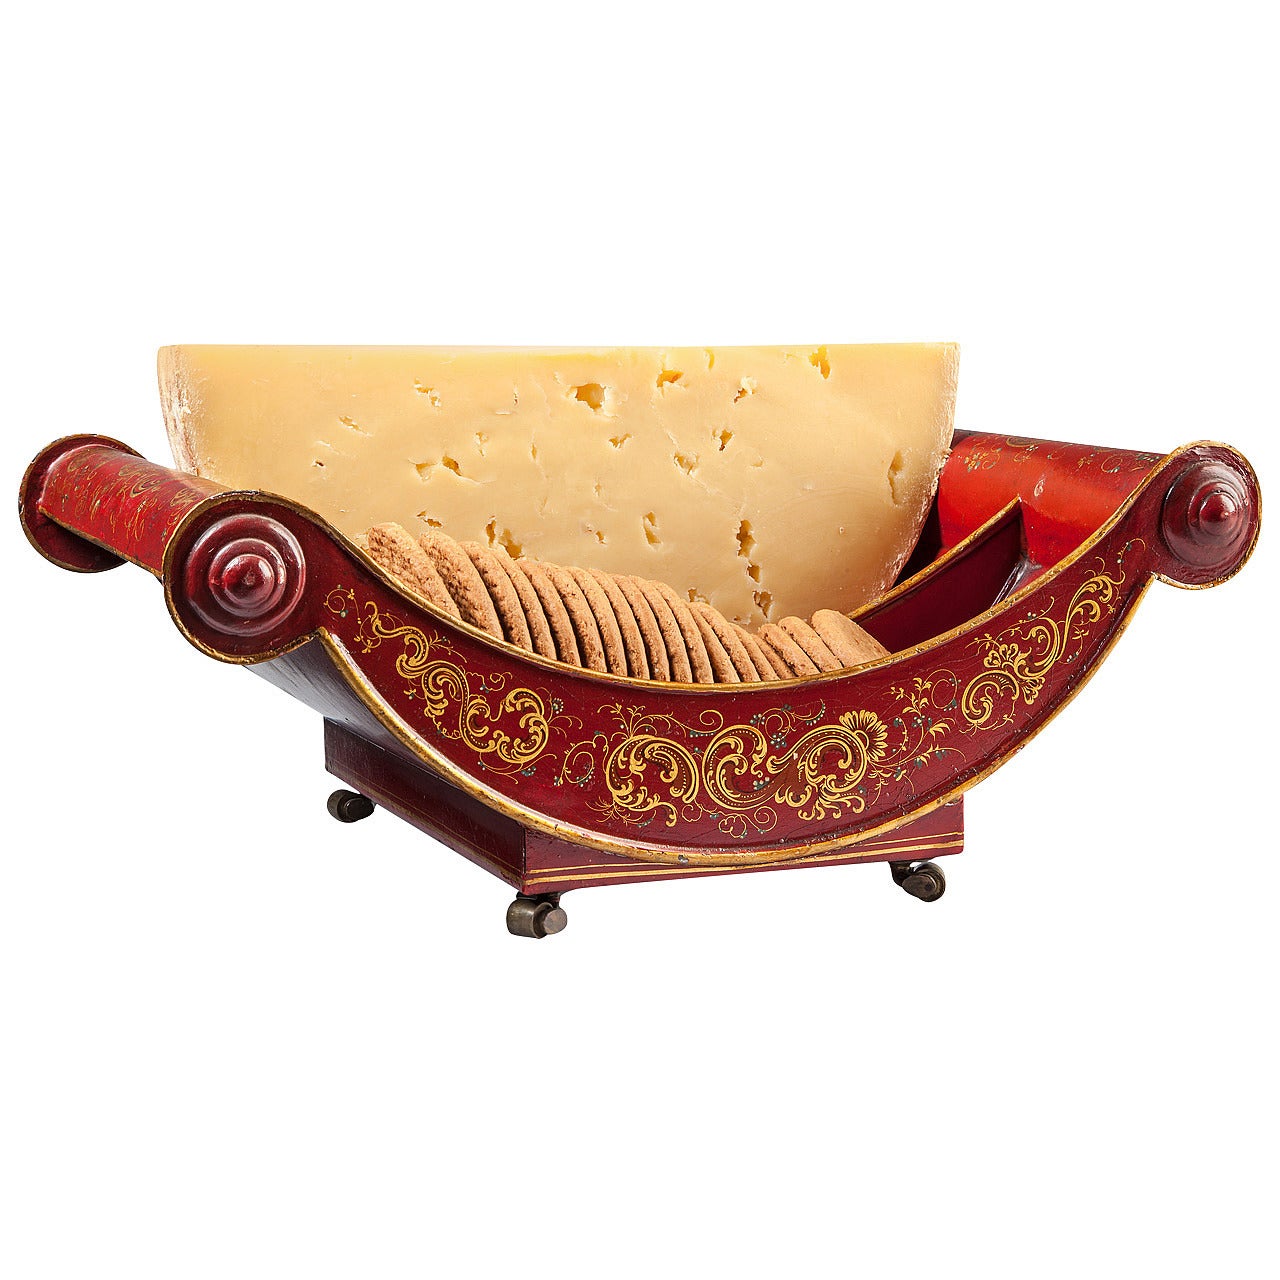 A Pontypool Ware Cheese Coaster